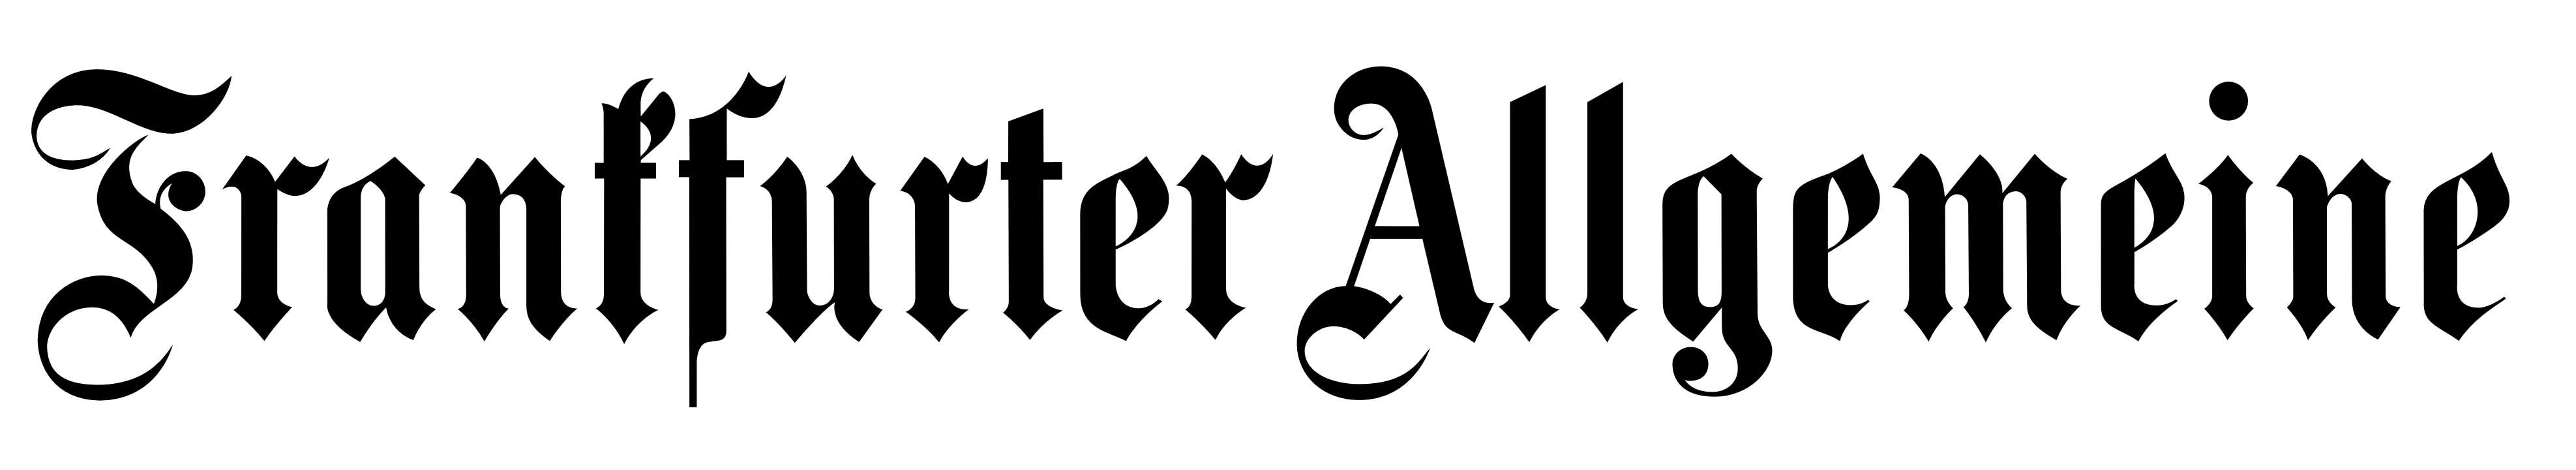 Frankfurter Allgemeine logo, logotype